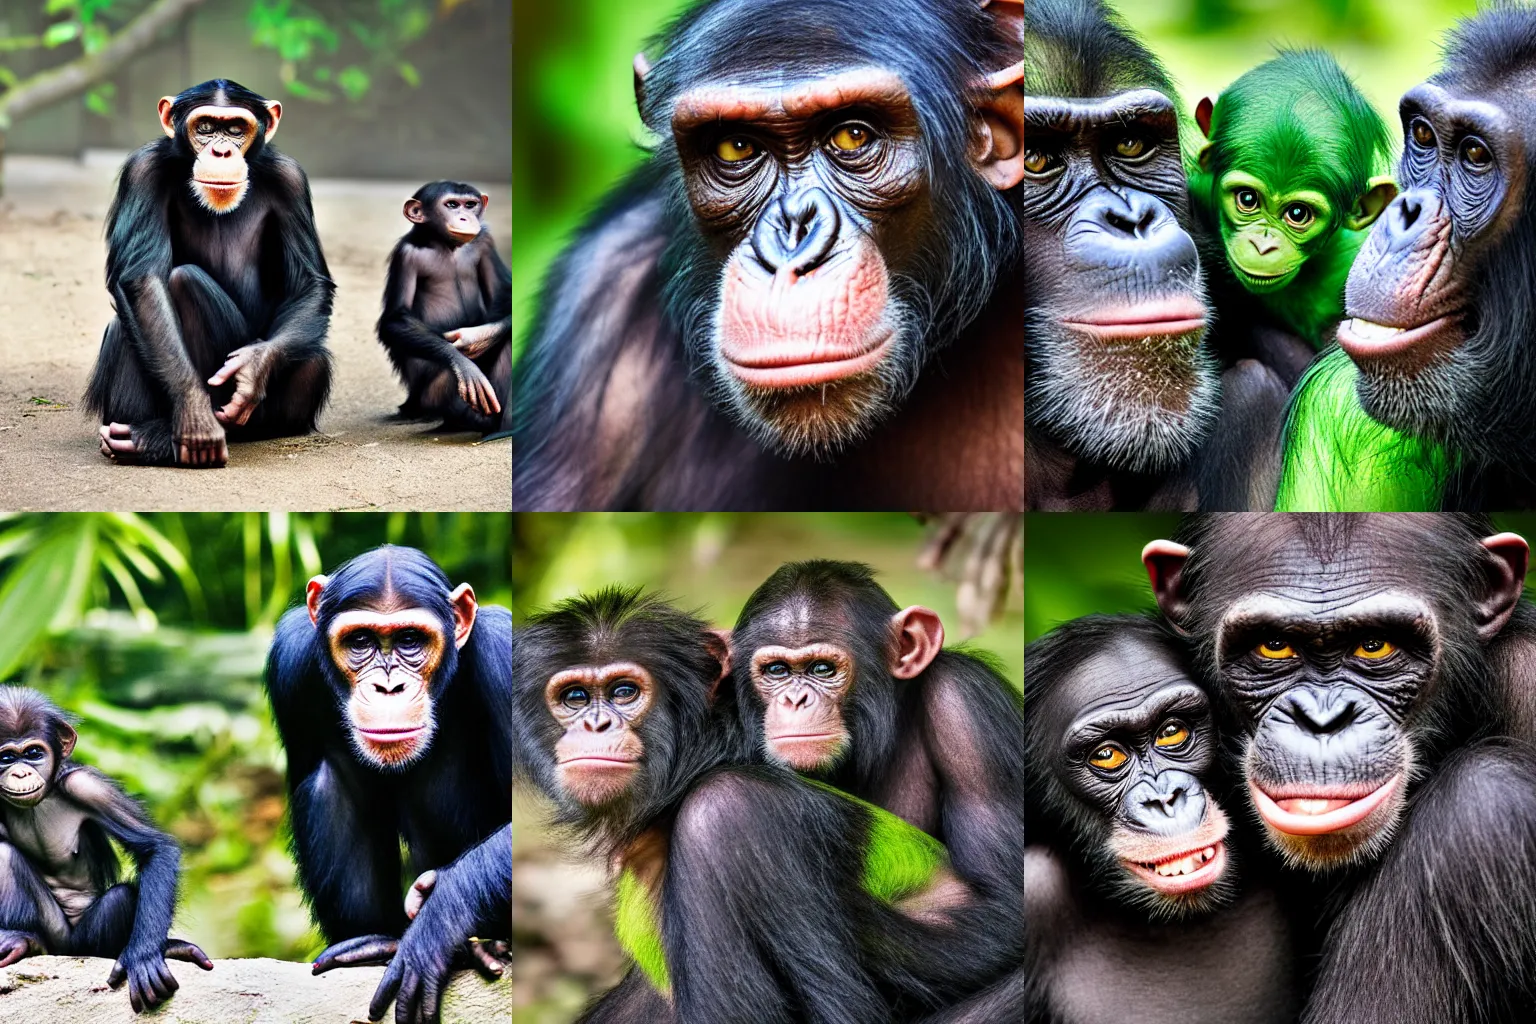 Prompt: portrait photo of the green goblin chimpanzee family